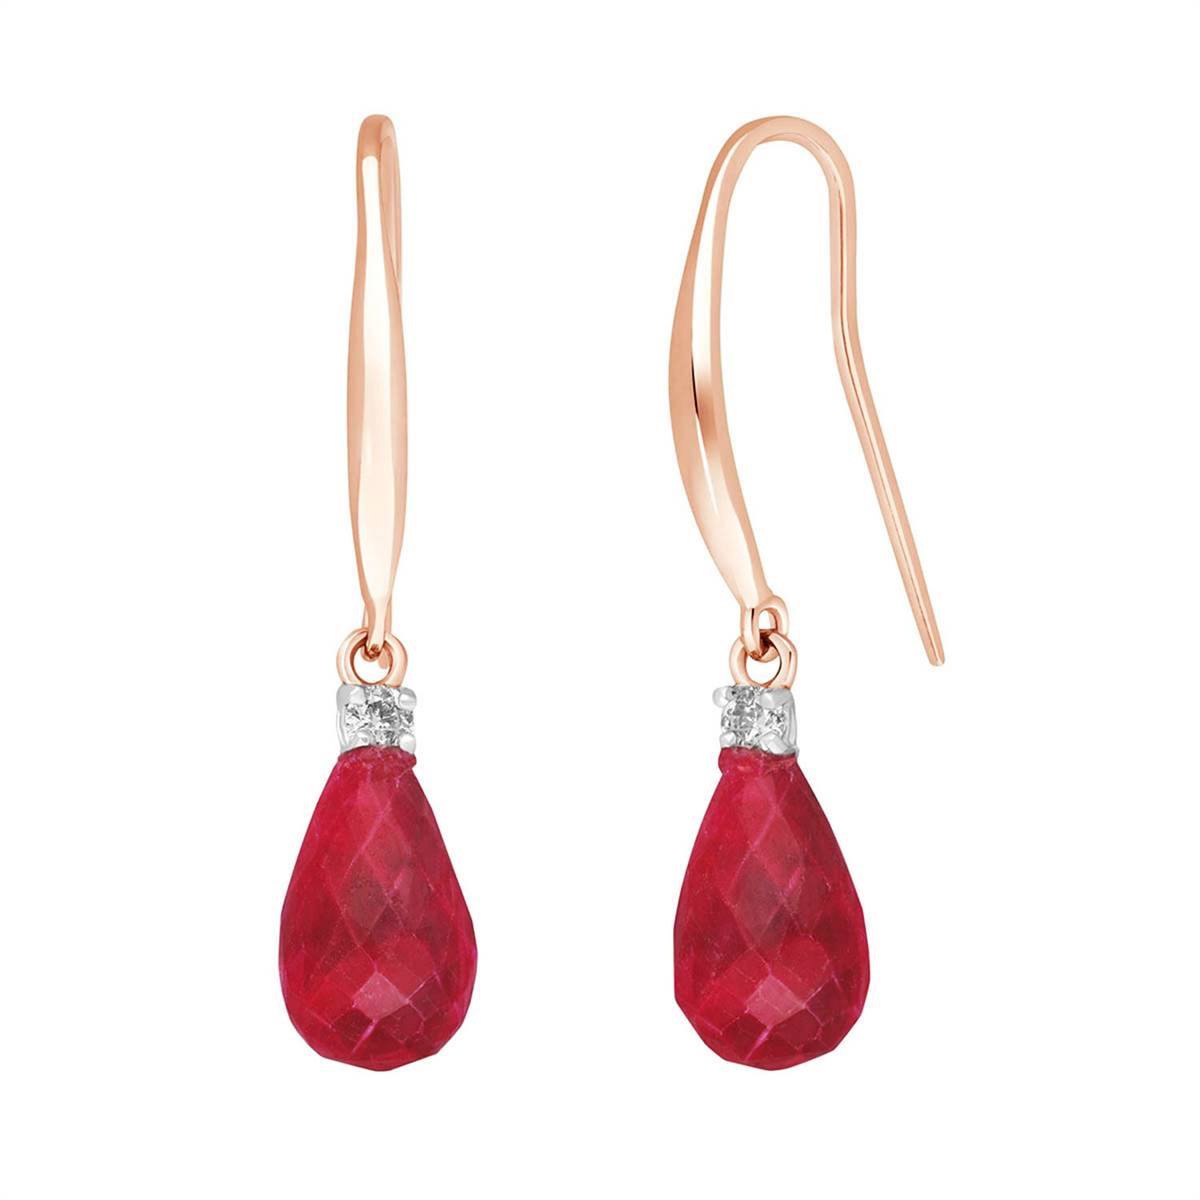 14K Solid Rose Gold Fish Hook Diamond & Ruby Earrings Certified